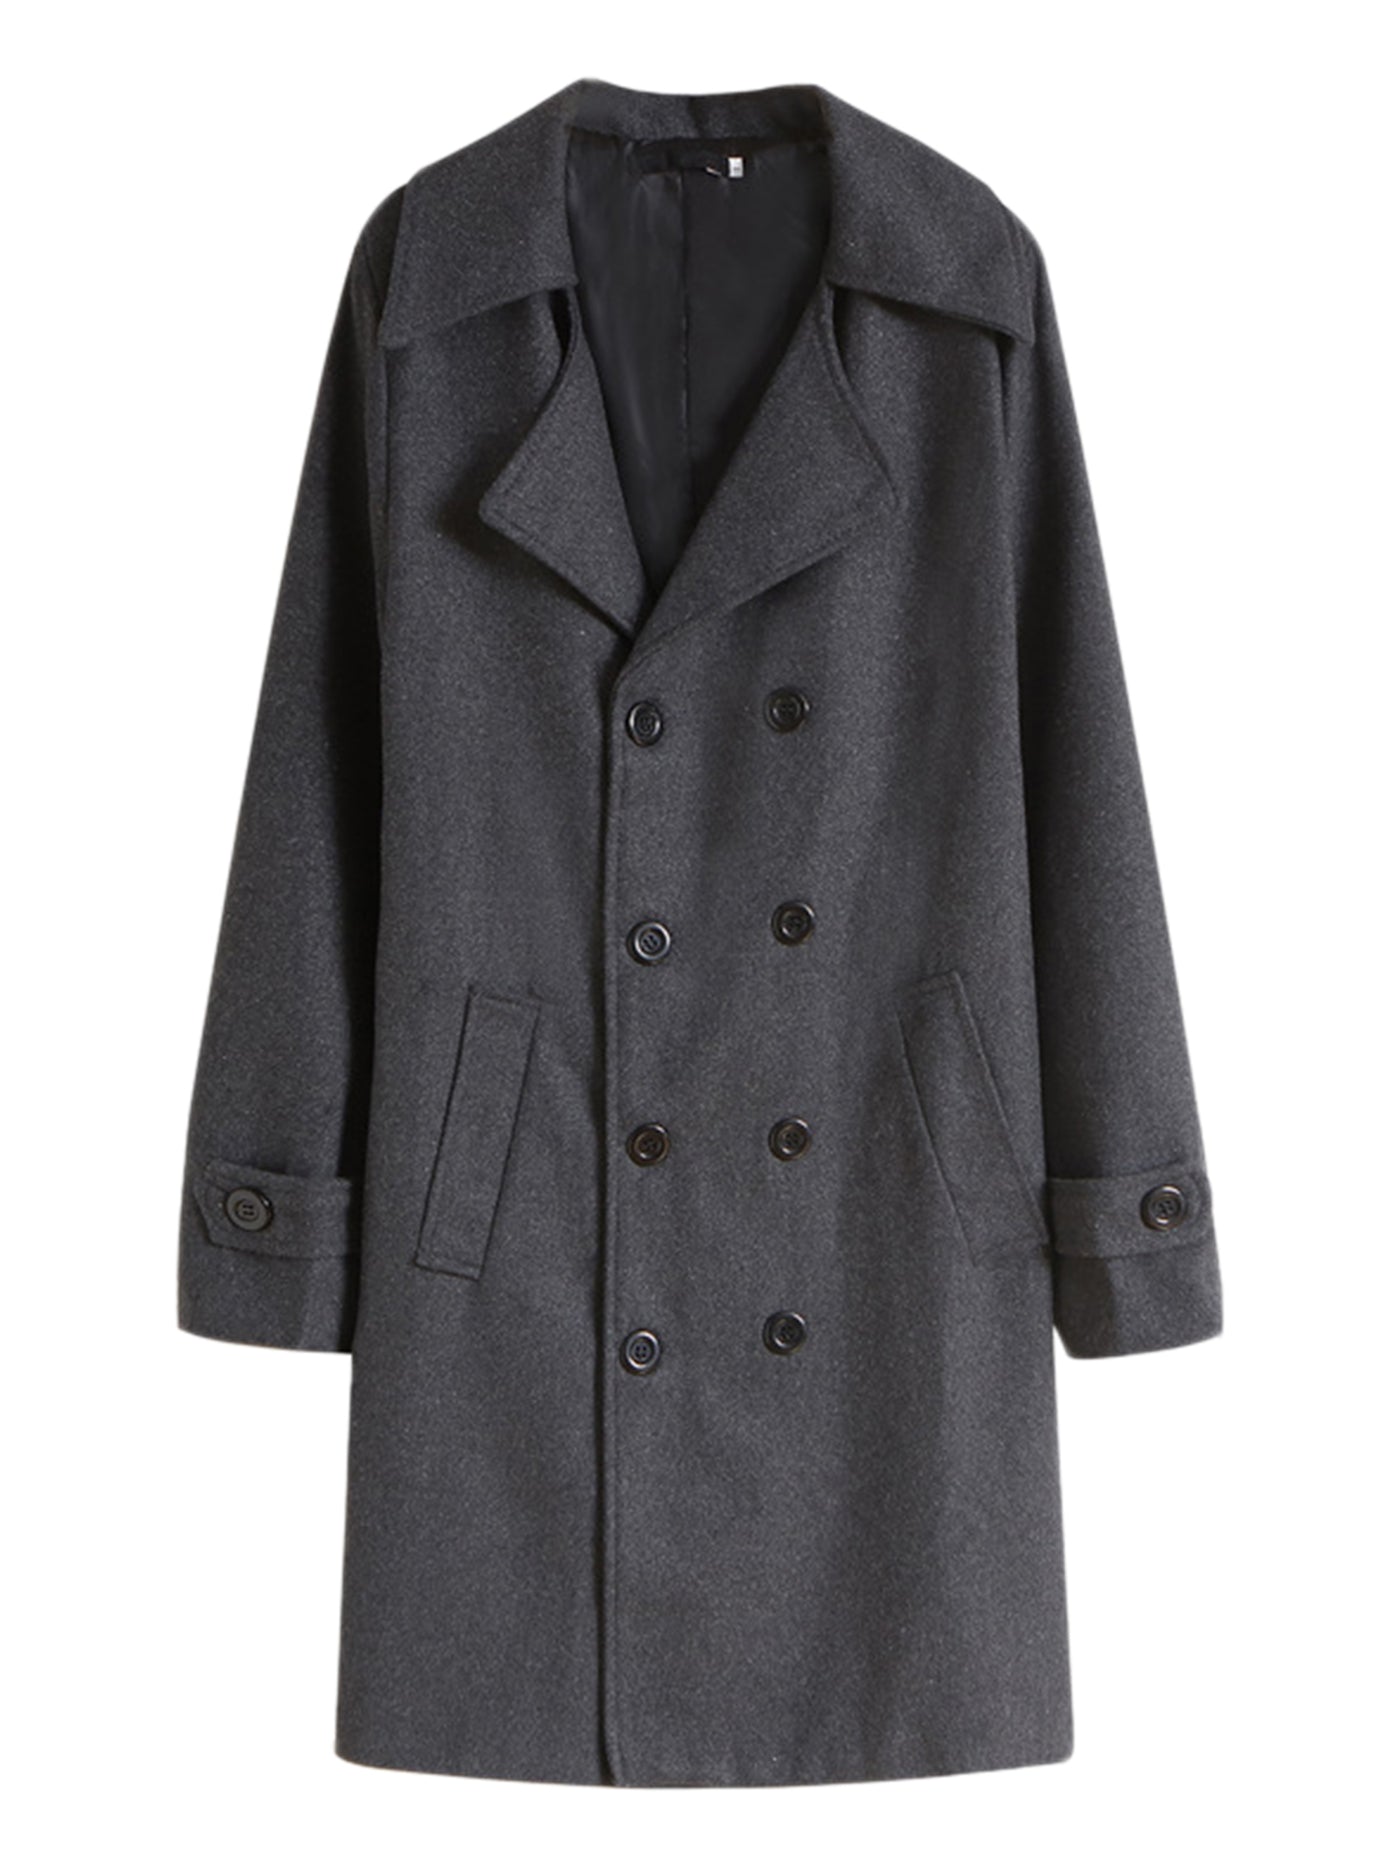 Bublédon Men's Winter Overcoat Double Breasted Lapel Collar Long Pea Coat